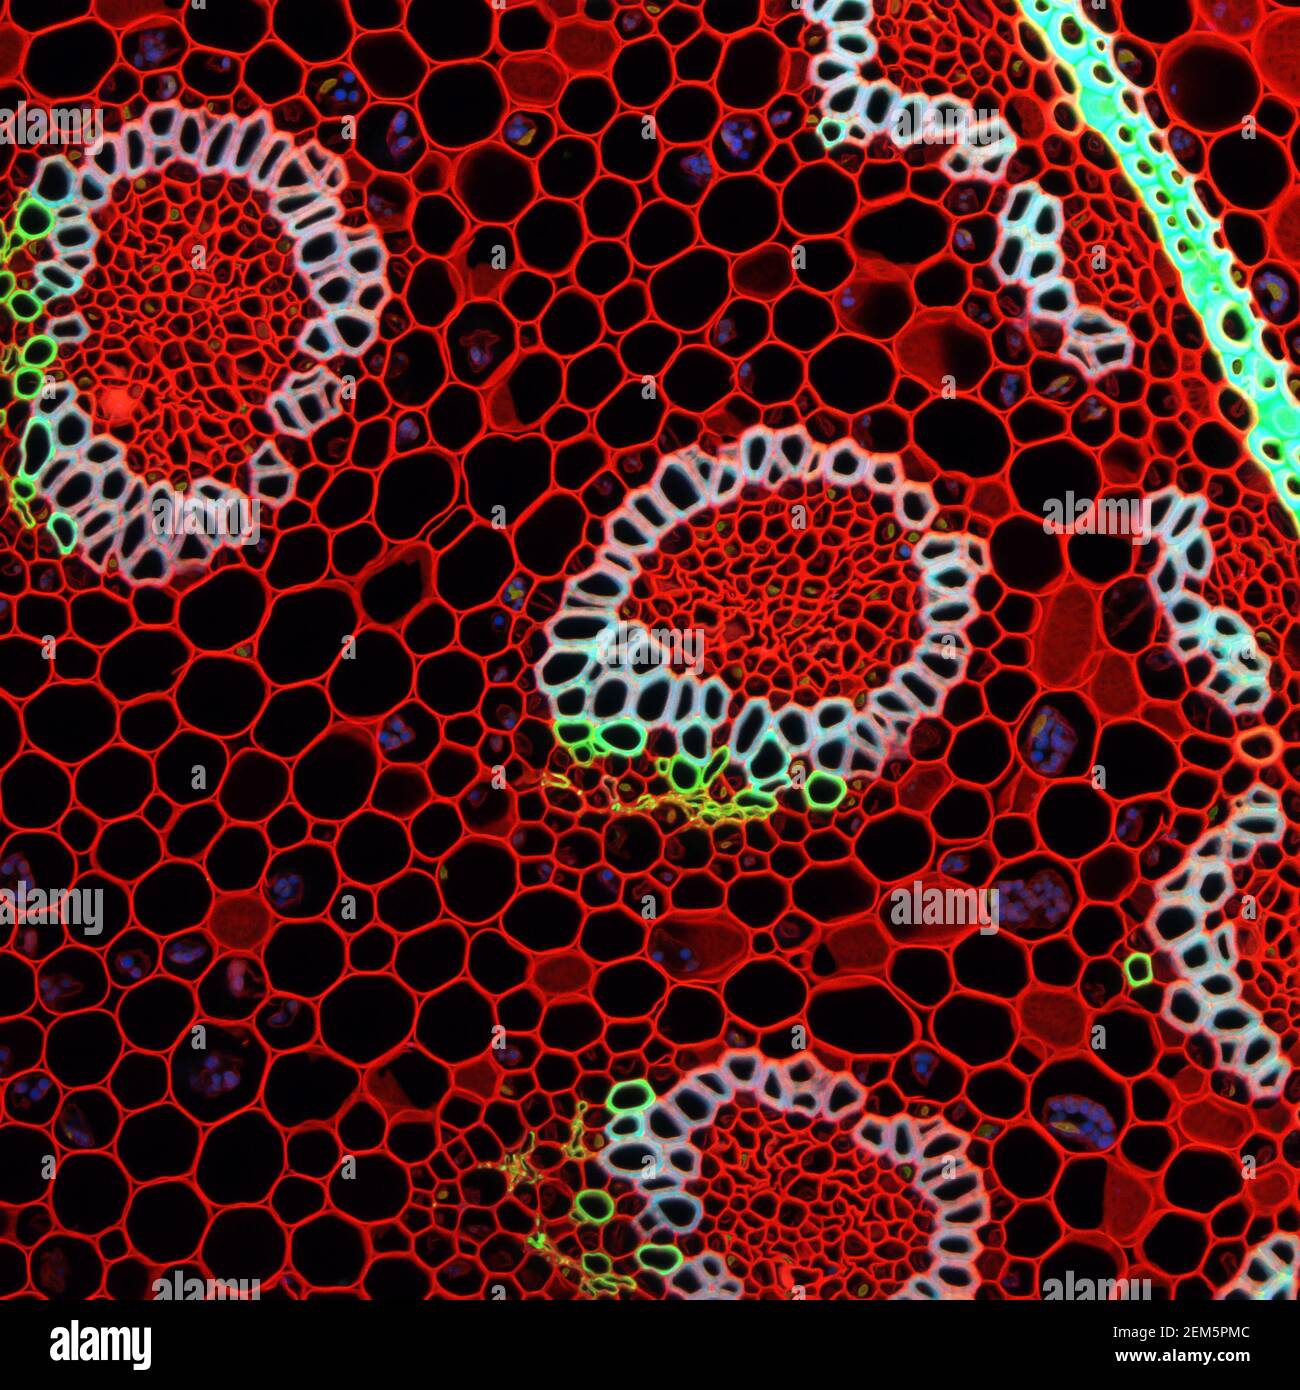 Muestra microscópica de planta de Convallaria, señal de fluorescencia observada con microscopía de barrido láser confocal Foto de stock